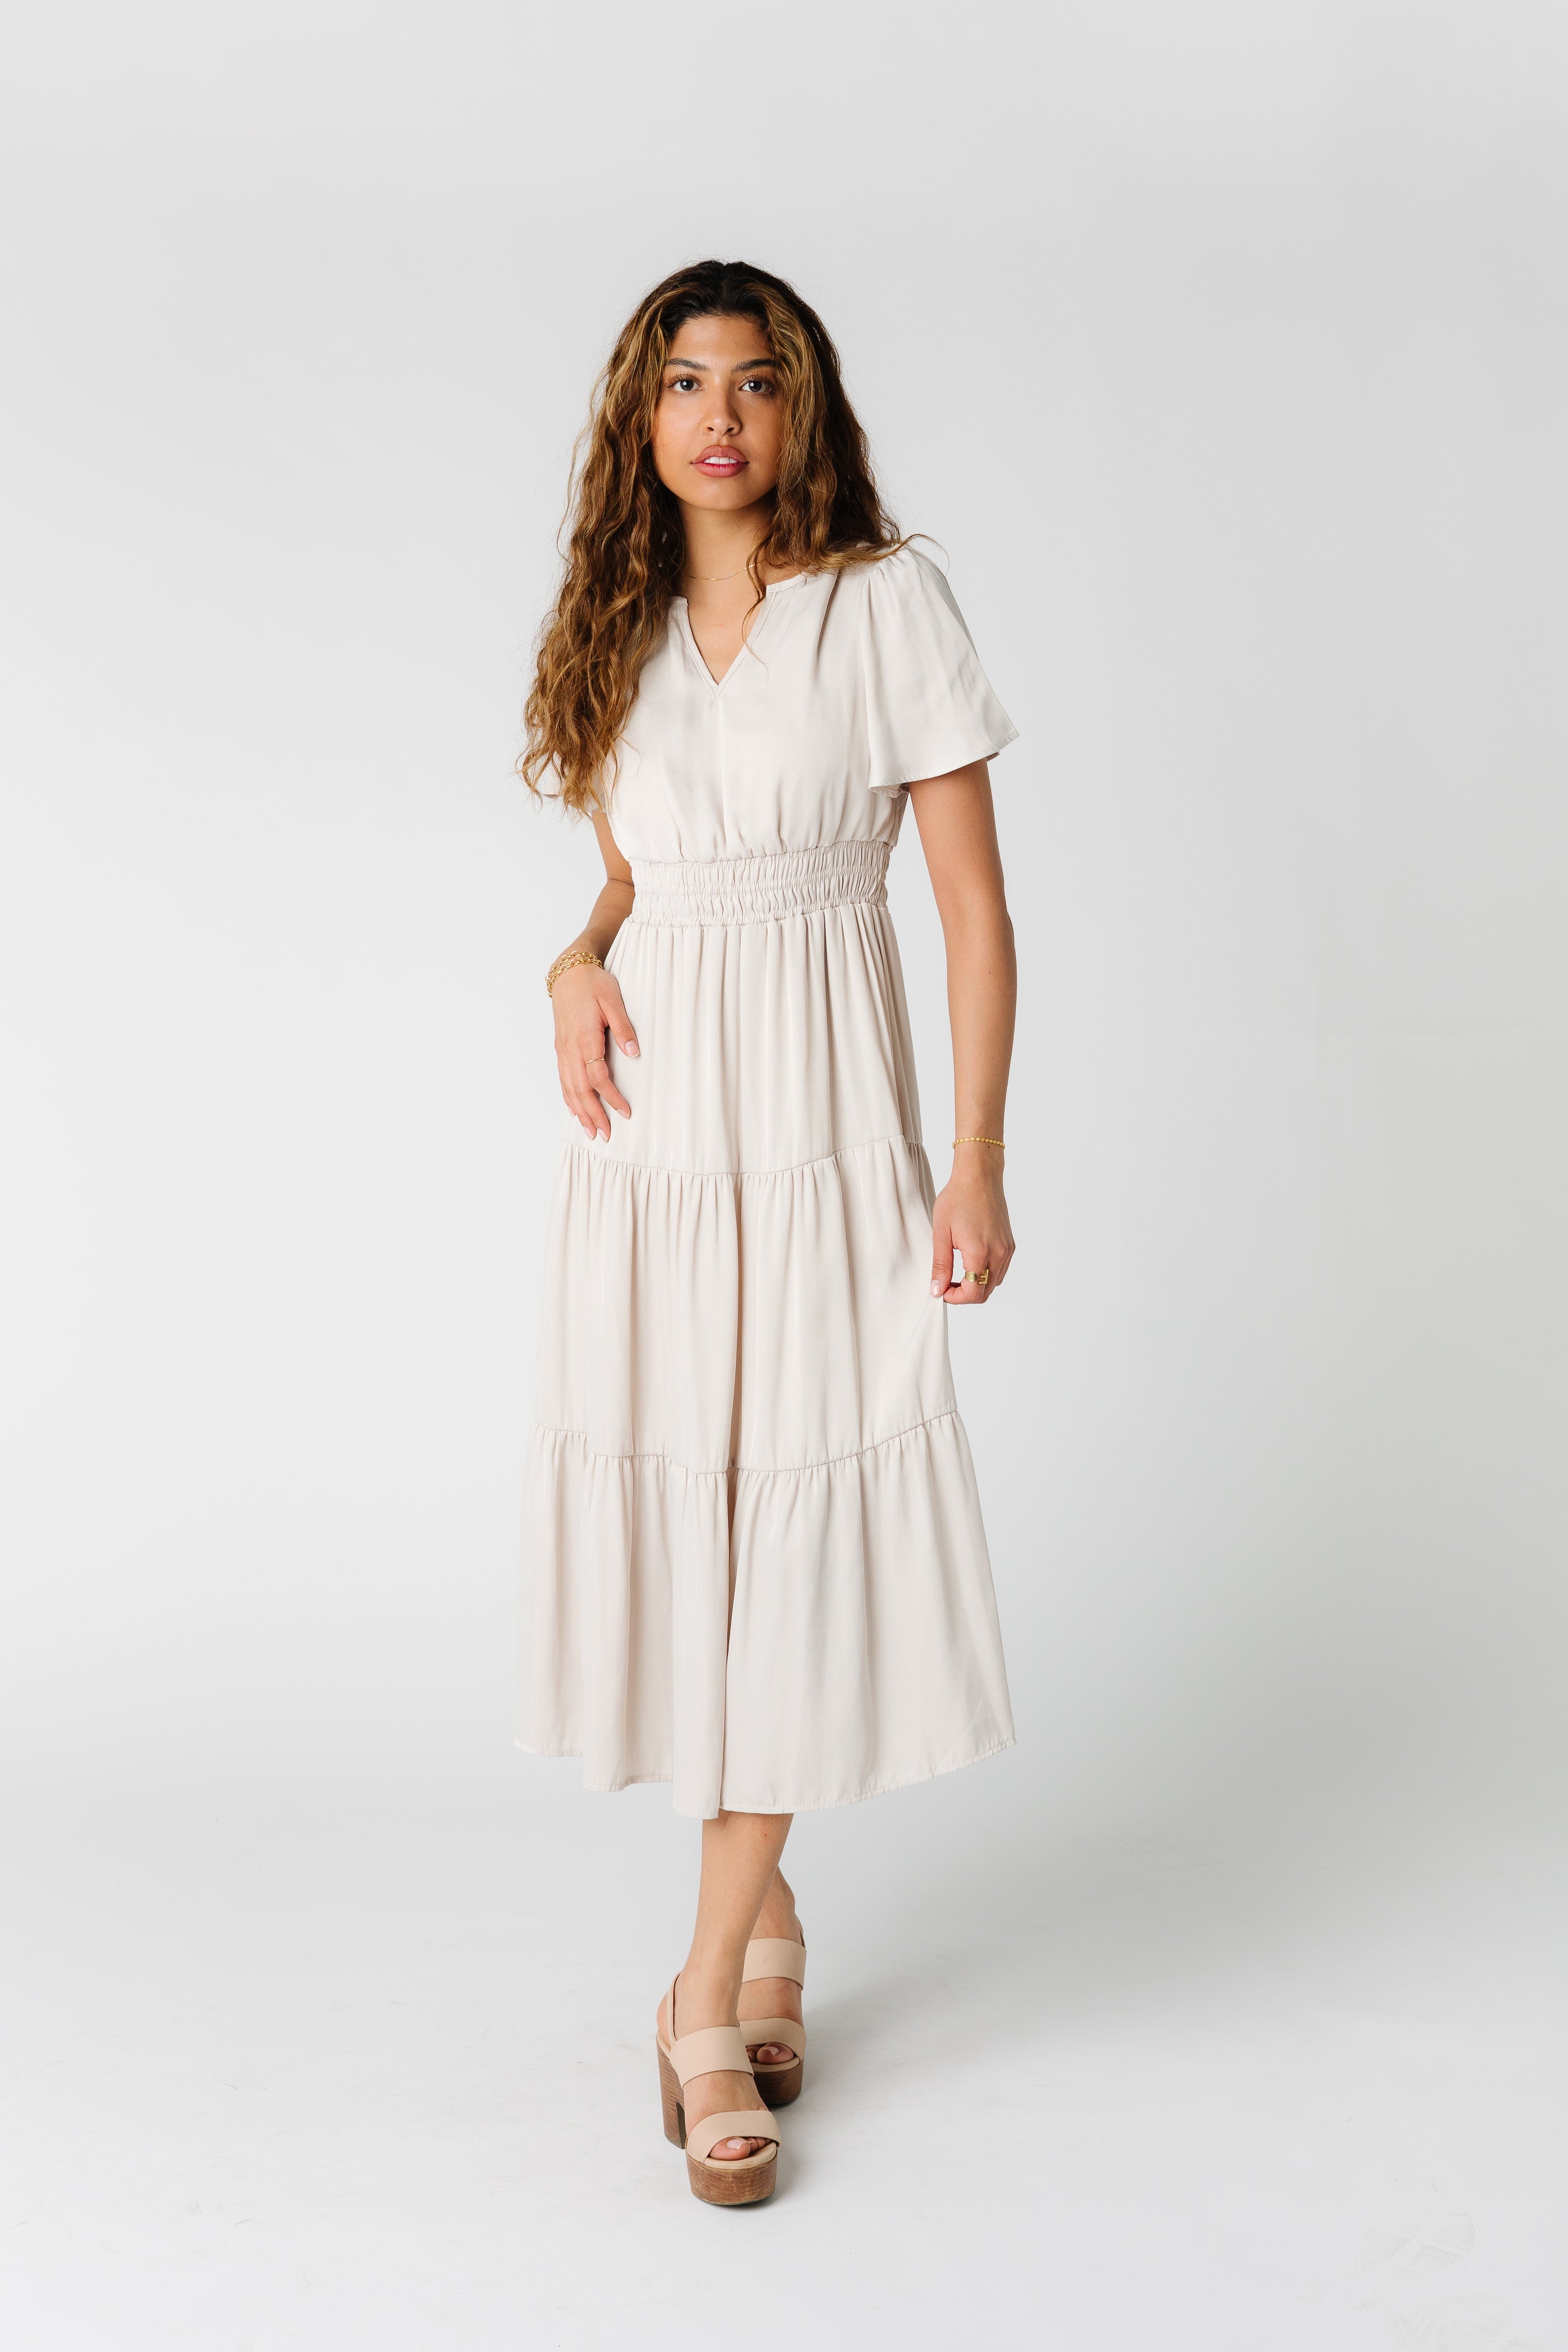 Split Tiered Midi Dress WOMEN'S DRESS Blu Pepper Ivory S 